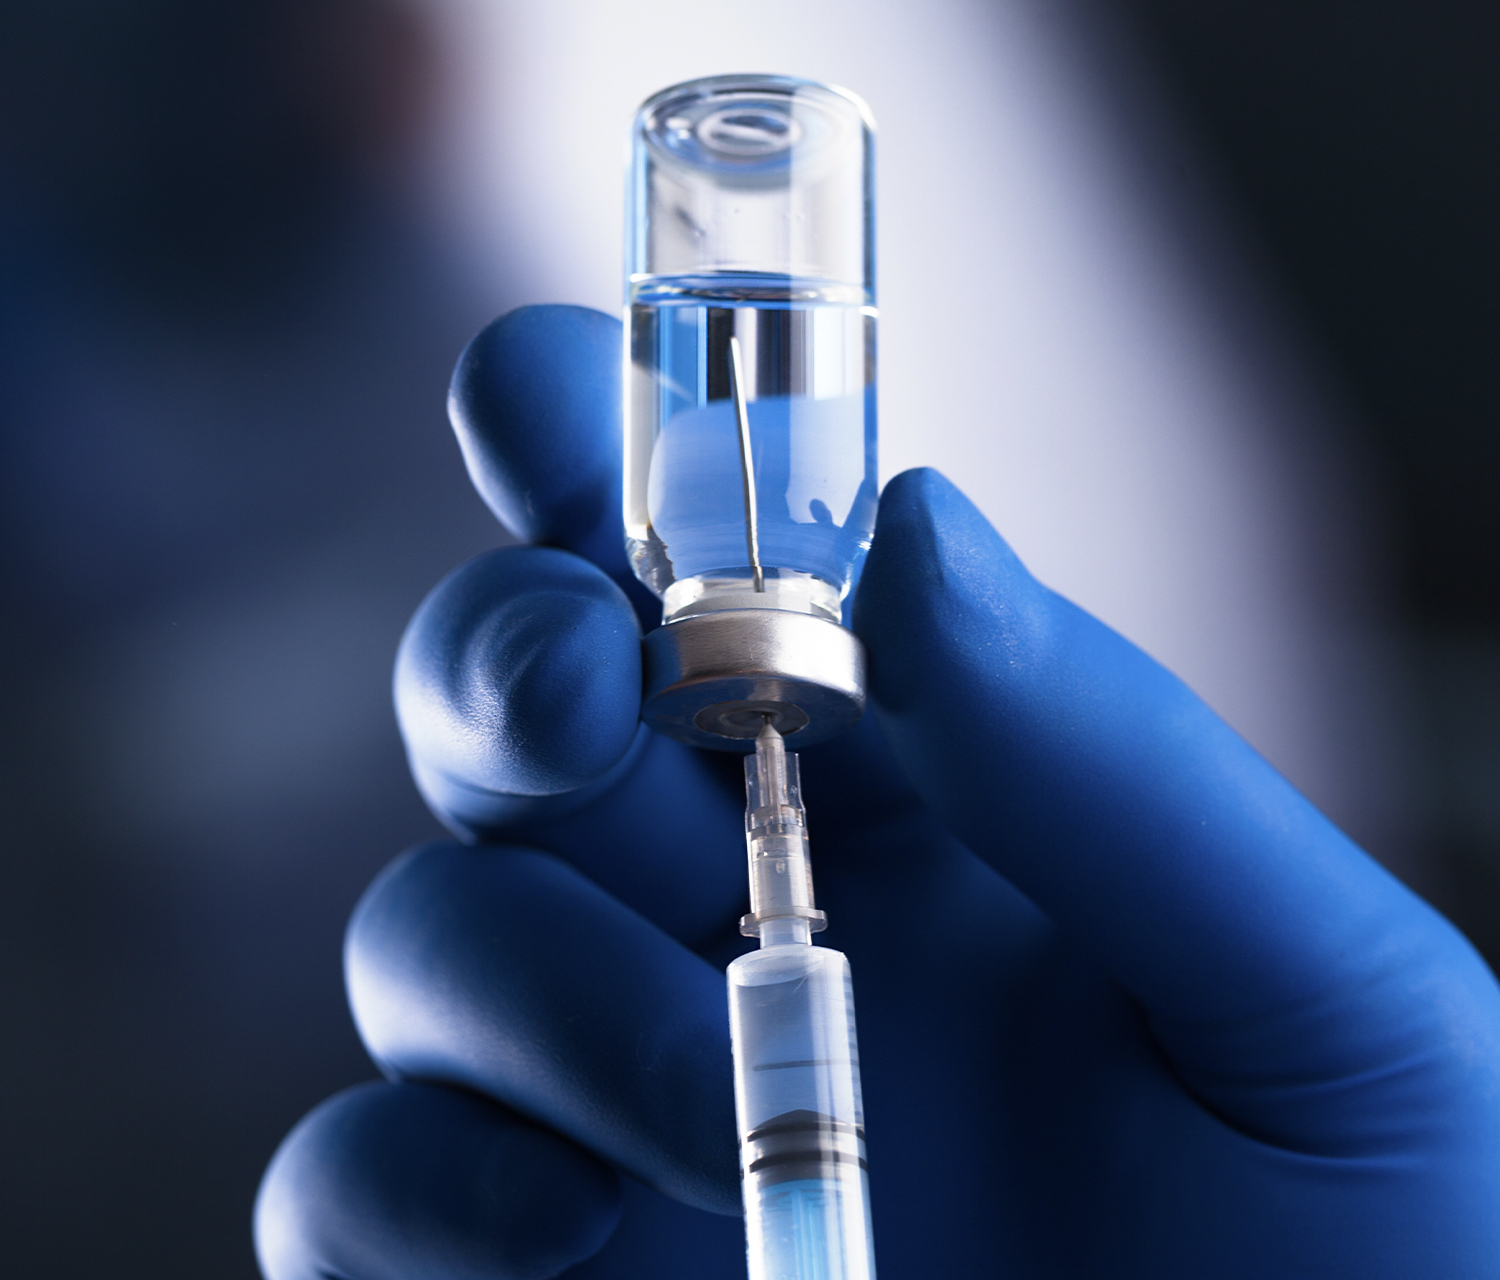 Vaccine stored in a ultra-low temperature freezer